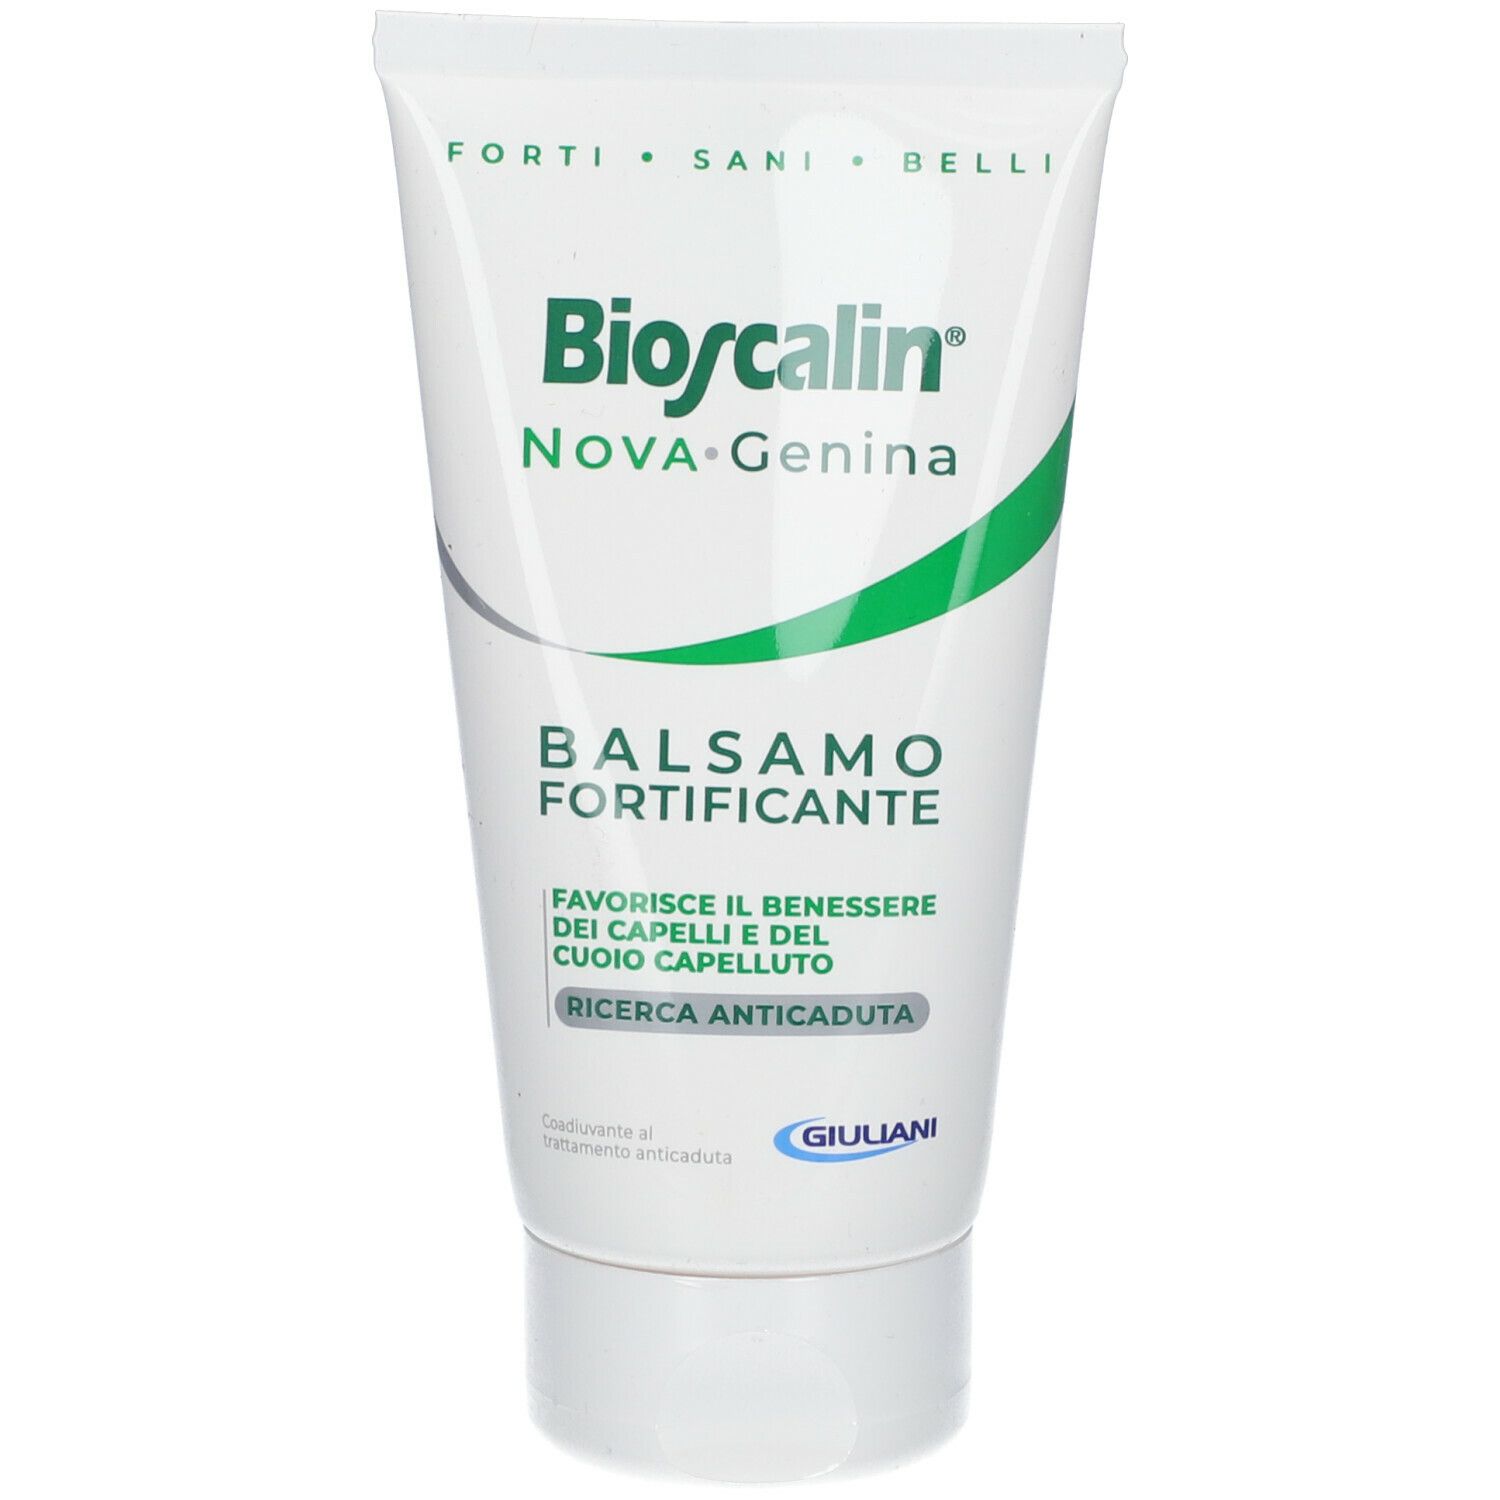 Bioscalin® NOVA Genina Balsamo Fortificante